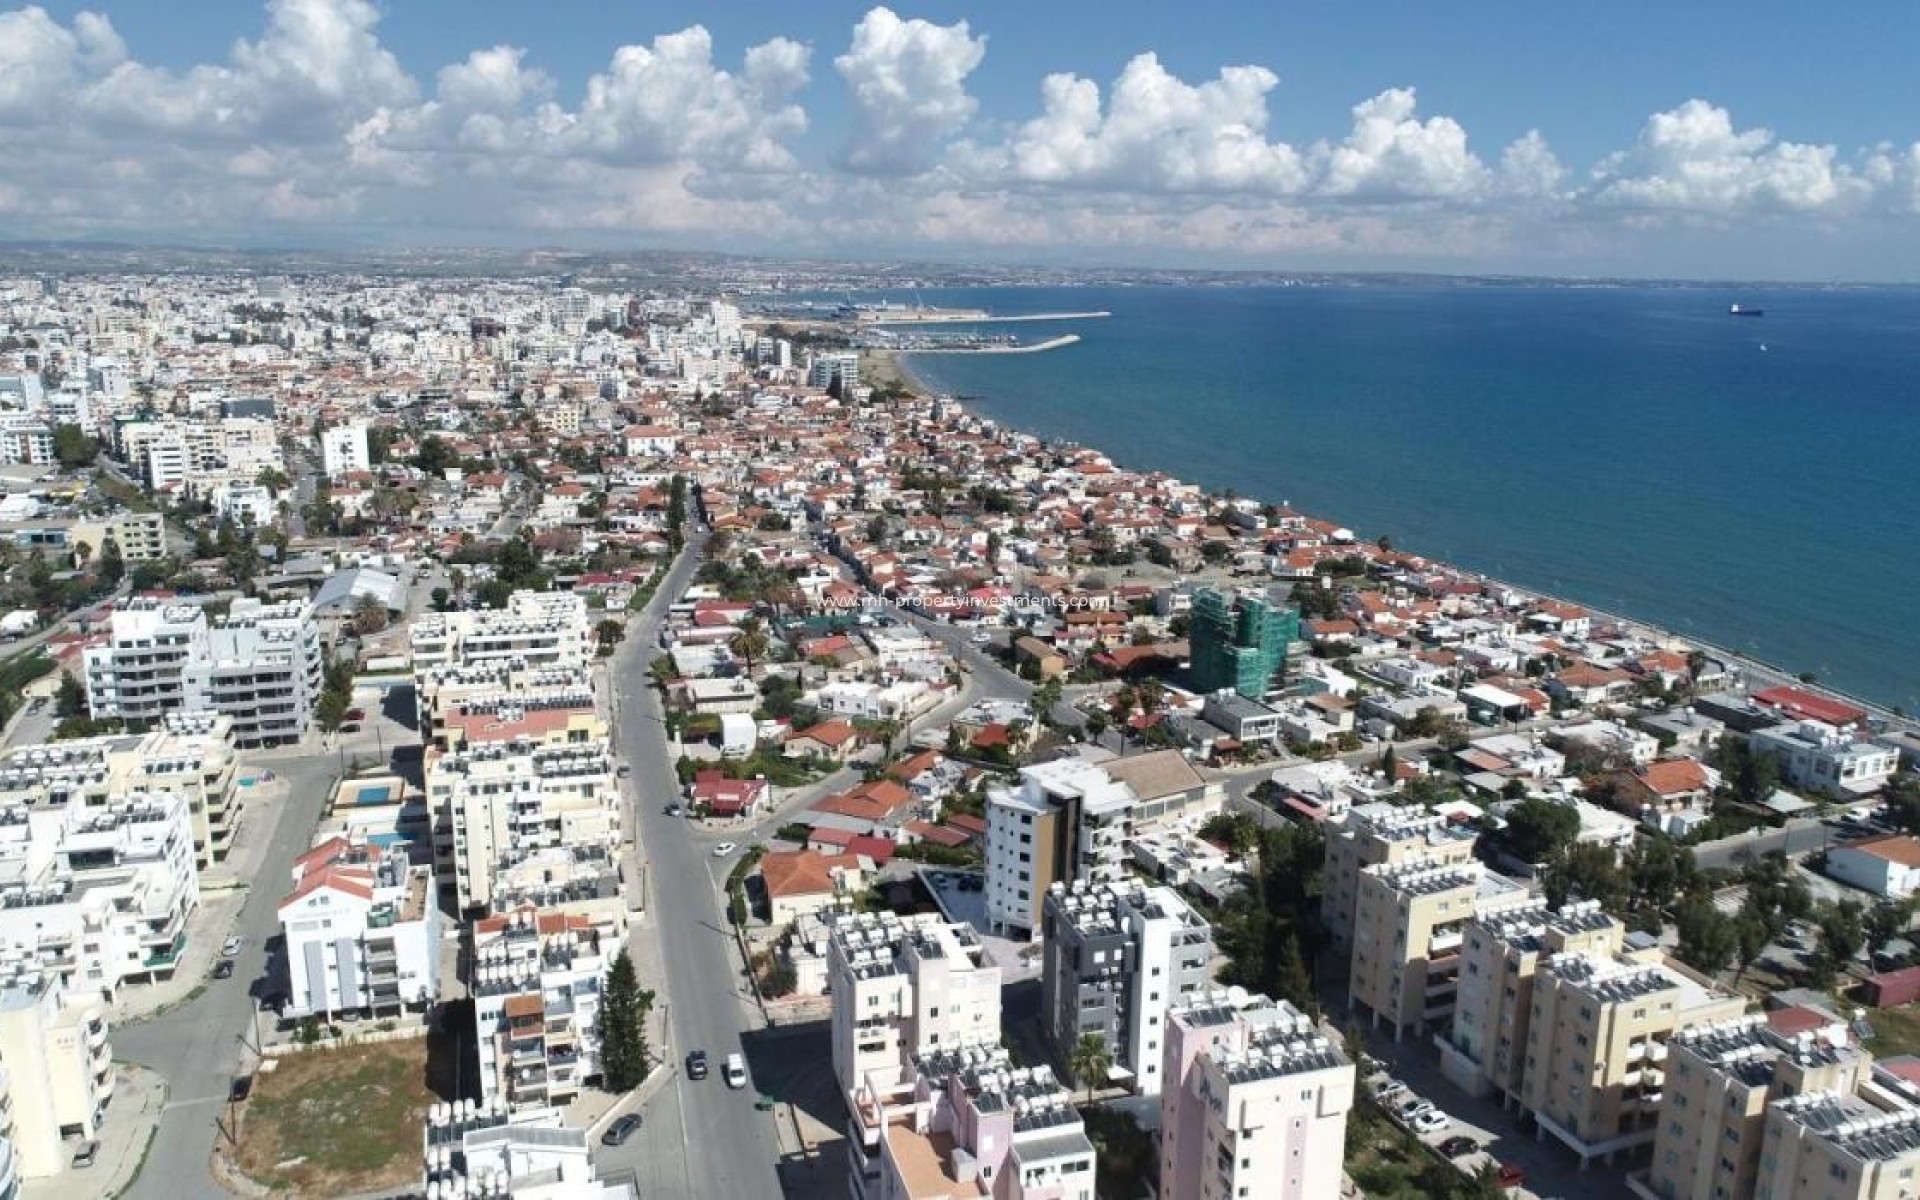 Resale - Apartment - Larnaca - Larnaca (City) - Makenzy